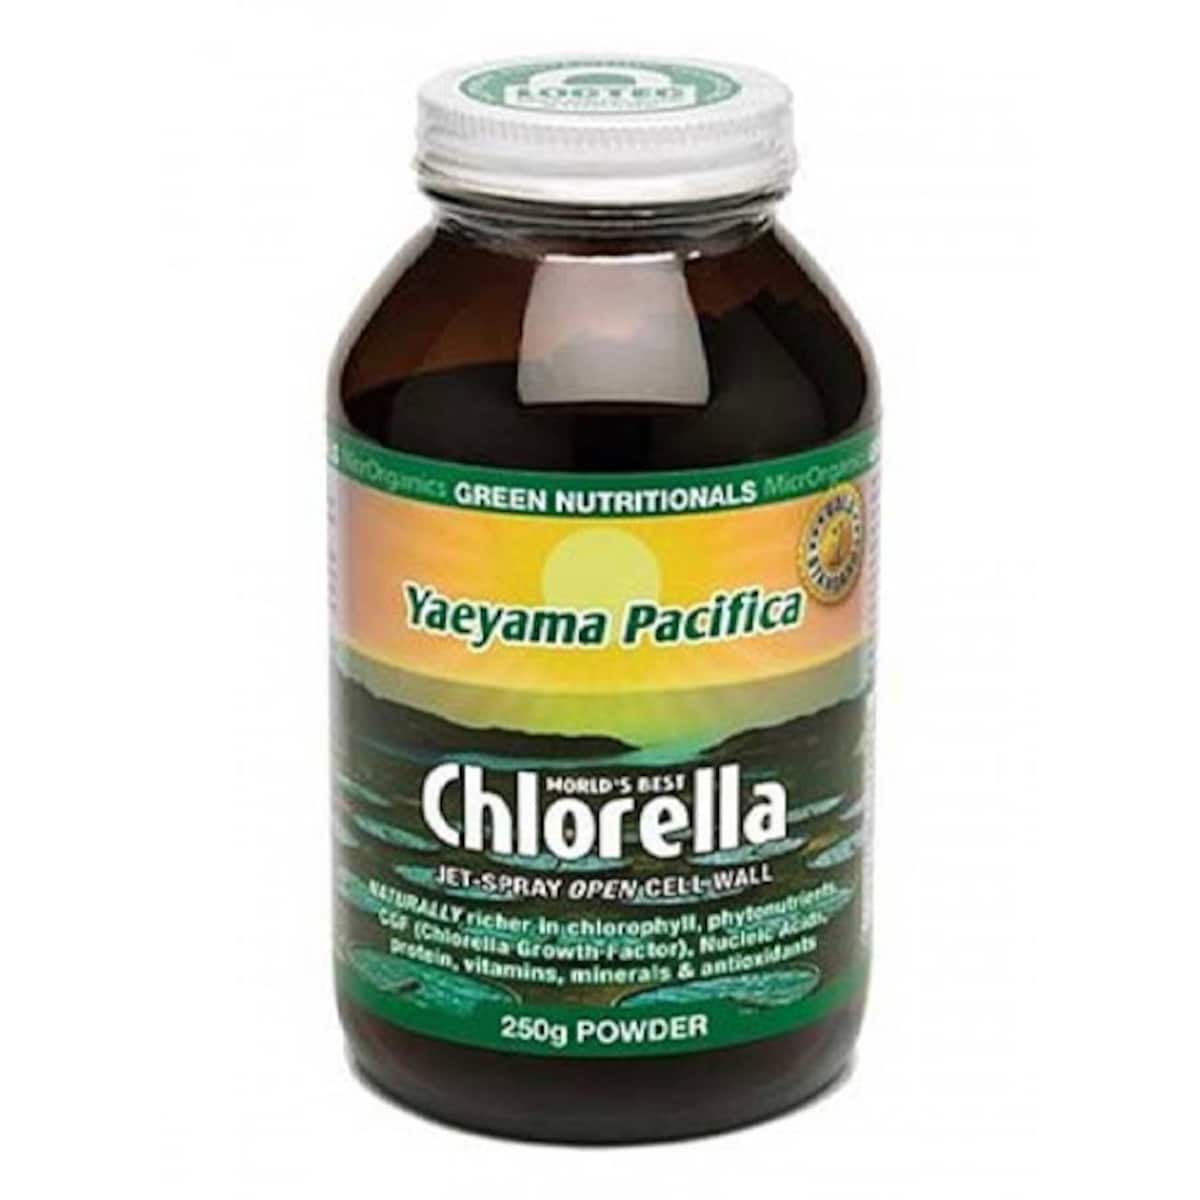 Green Nutritionals Yaeyama Pacifica Chlorella Powder 250g Australia